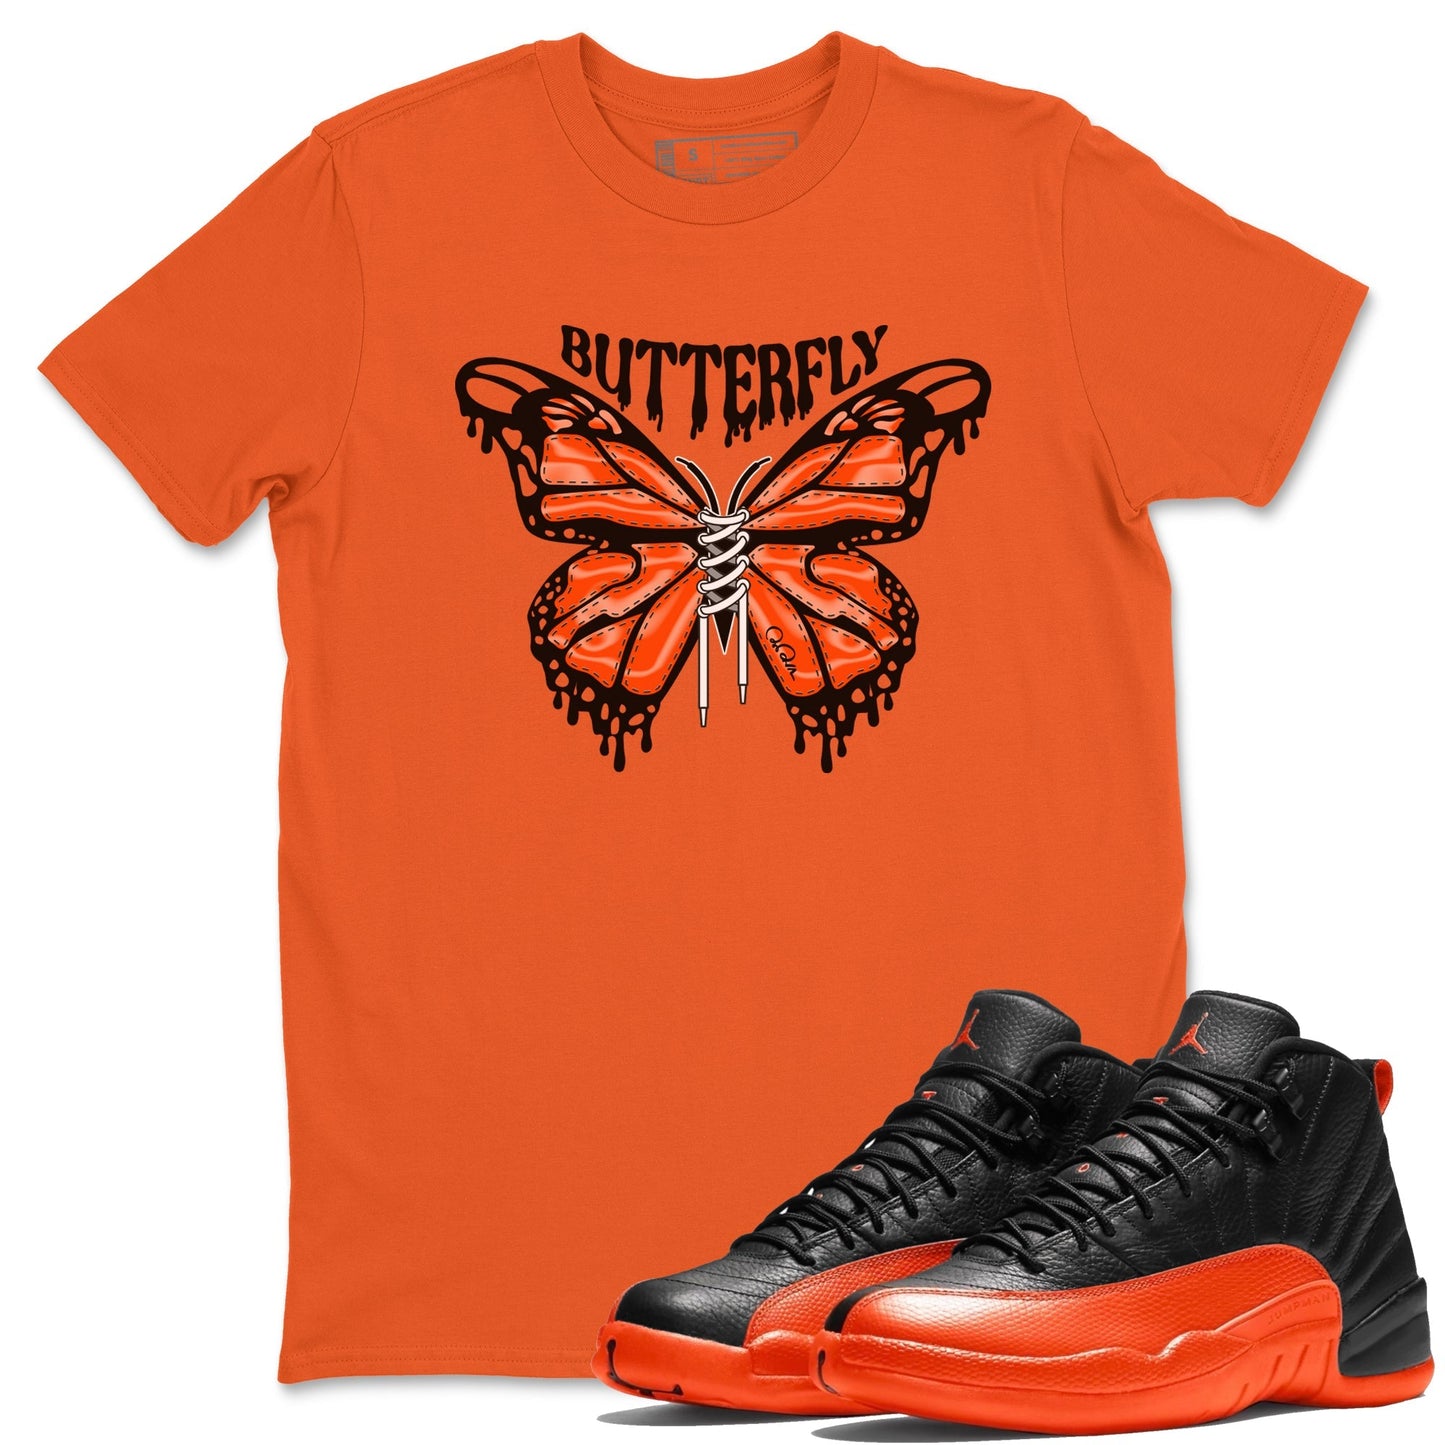 Air Jordan 12 Brilliant Orange Sneaker Match Tees Butterfly Sneaker Tees AJ12 Brilliant Orange Sneaker Release Tees Unisex Shirts Orange 1